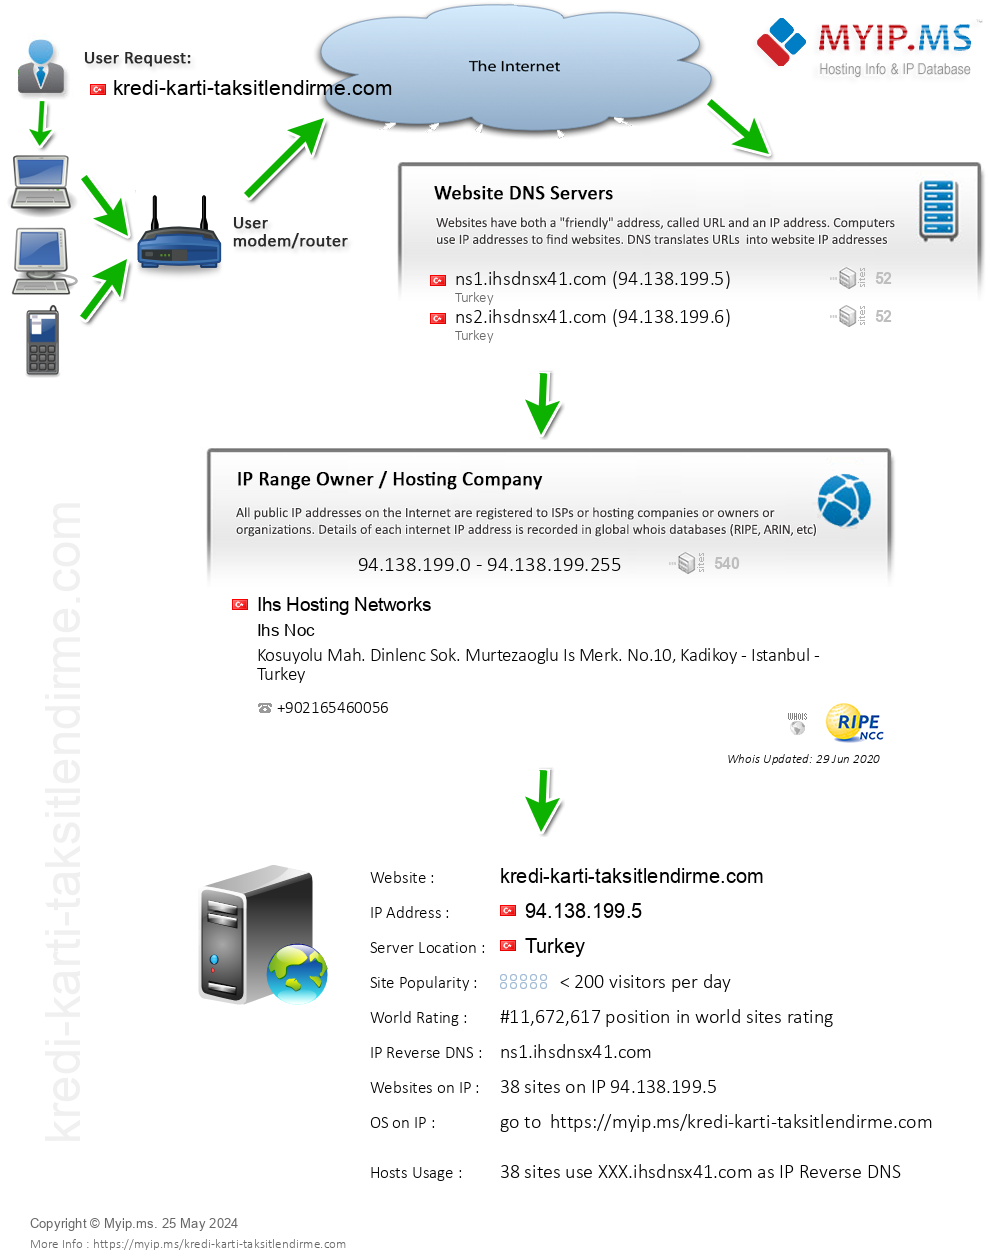 Kredi-karti-taksitlendirme.com - Website Hosting Visual IP Diagram